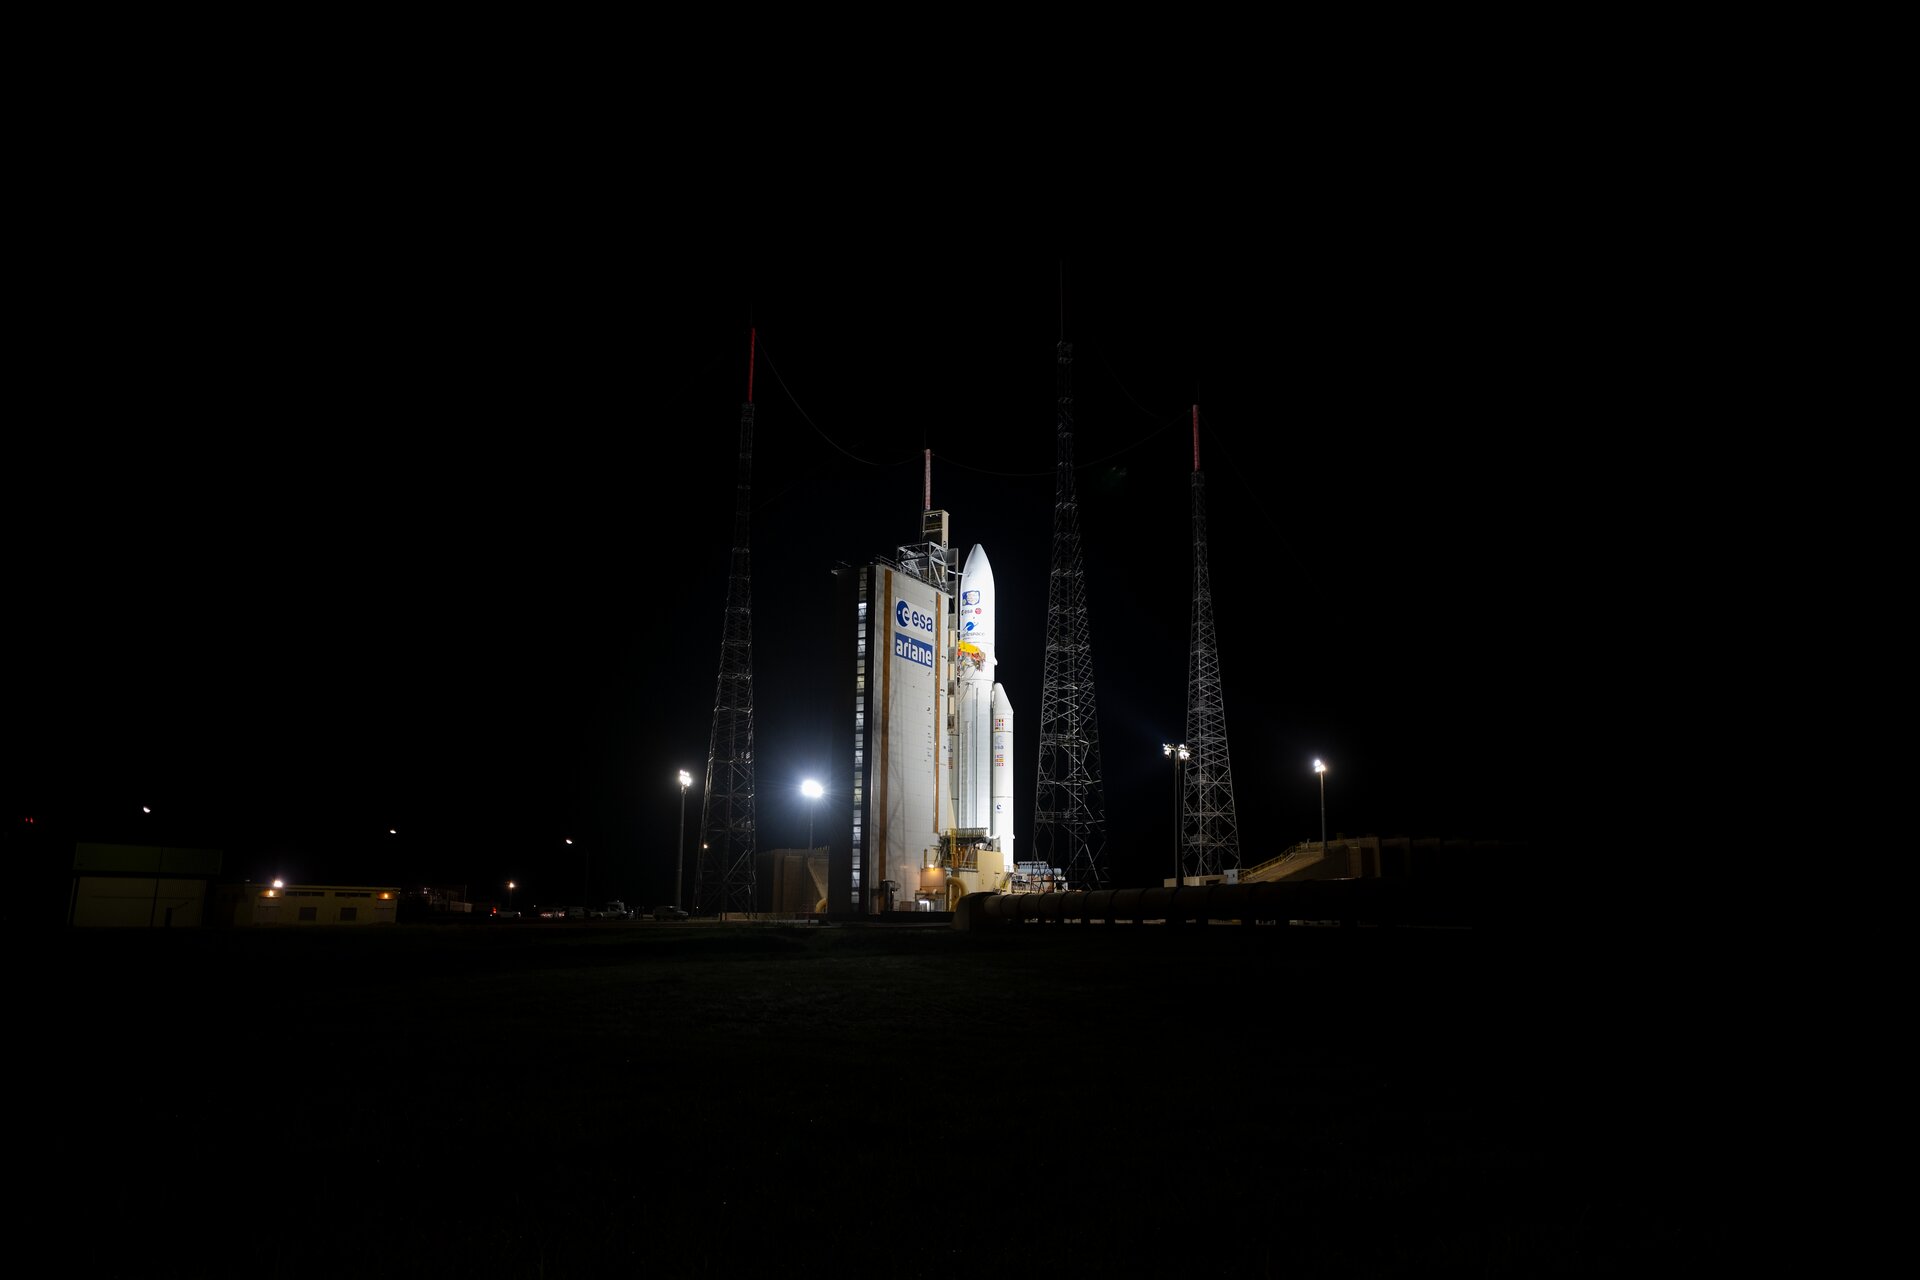 Ariane 5 VA261-Flug: Startverzögerung